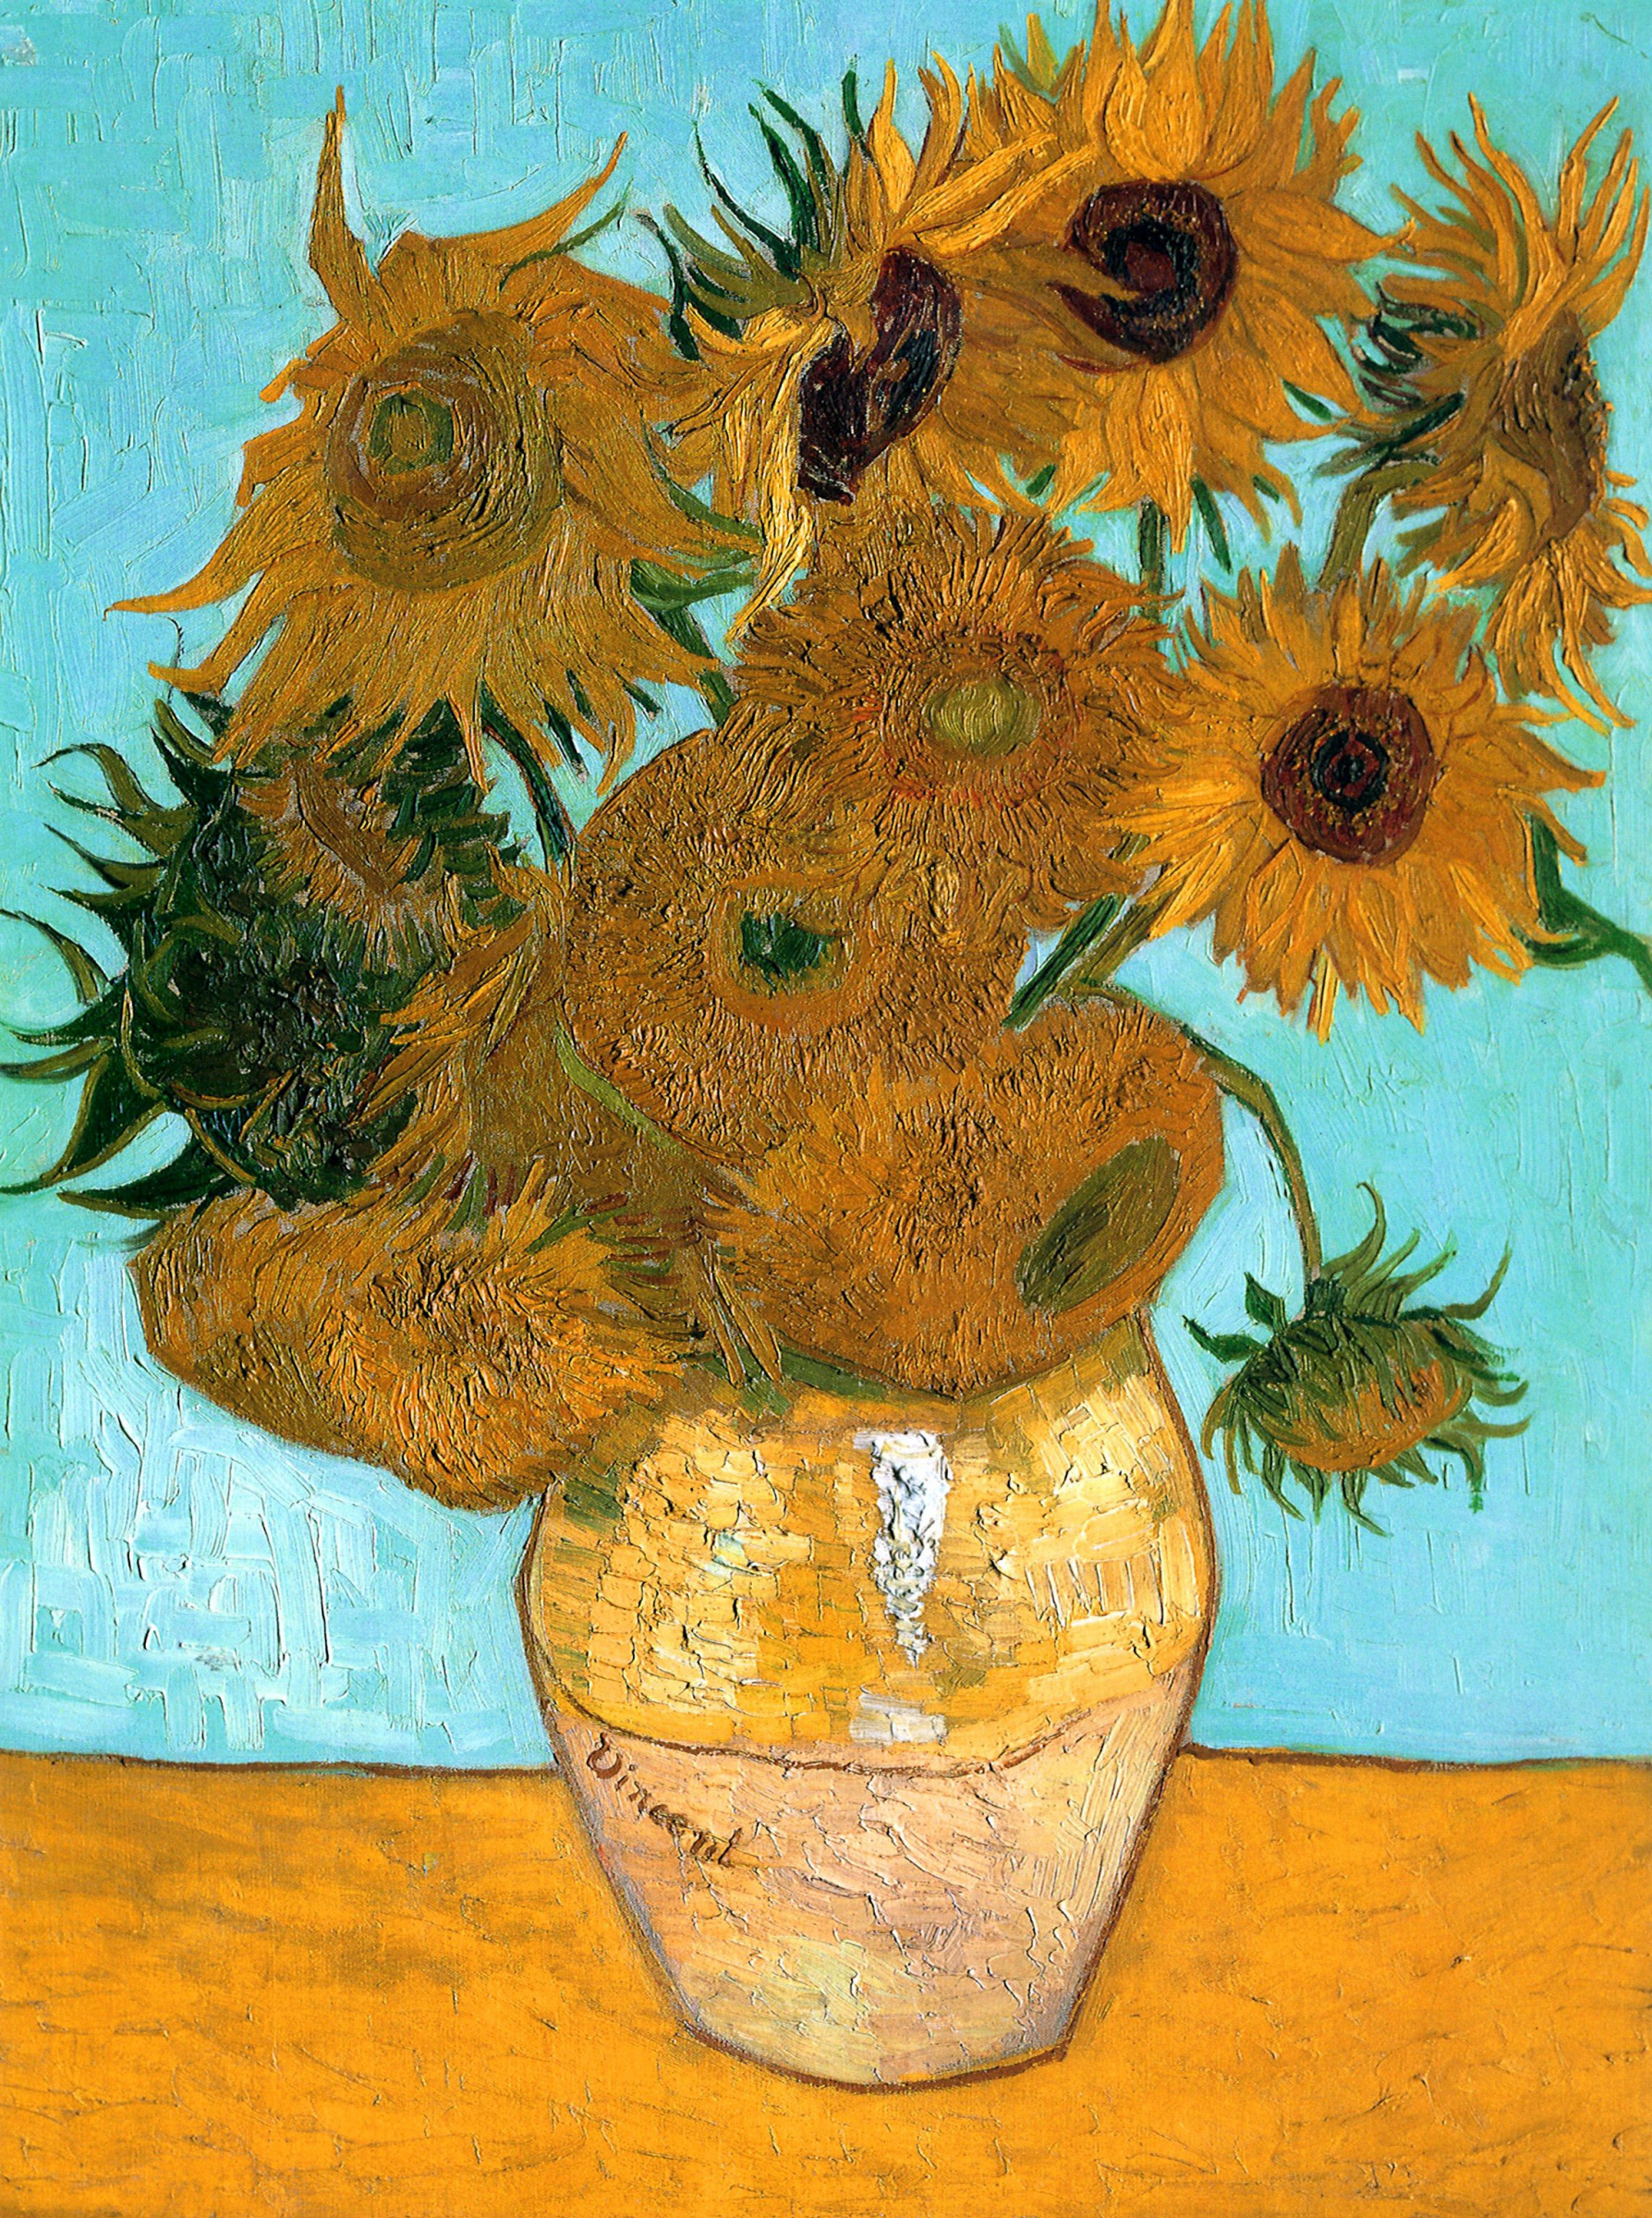 Van Gogh Famous Paintings Guitar Picks 12-Pack Celluloid Medium - Almond Blossom Sunflowers Series Best Stocking Stuffer Gifts for Men Women 